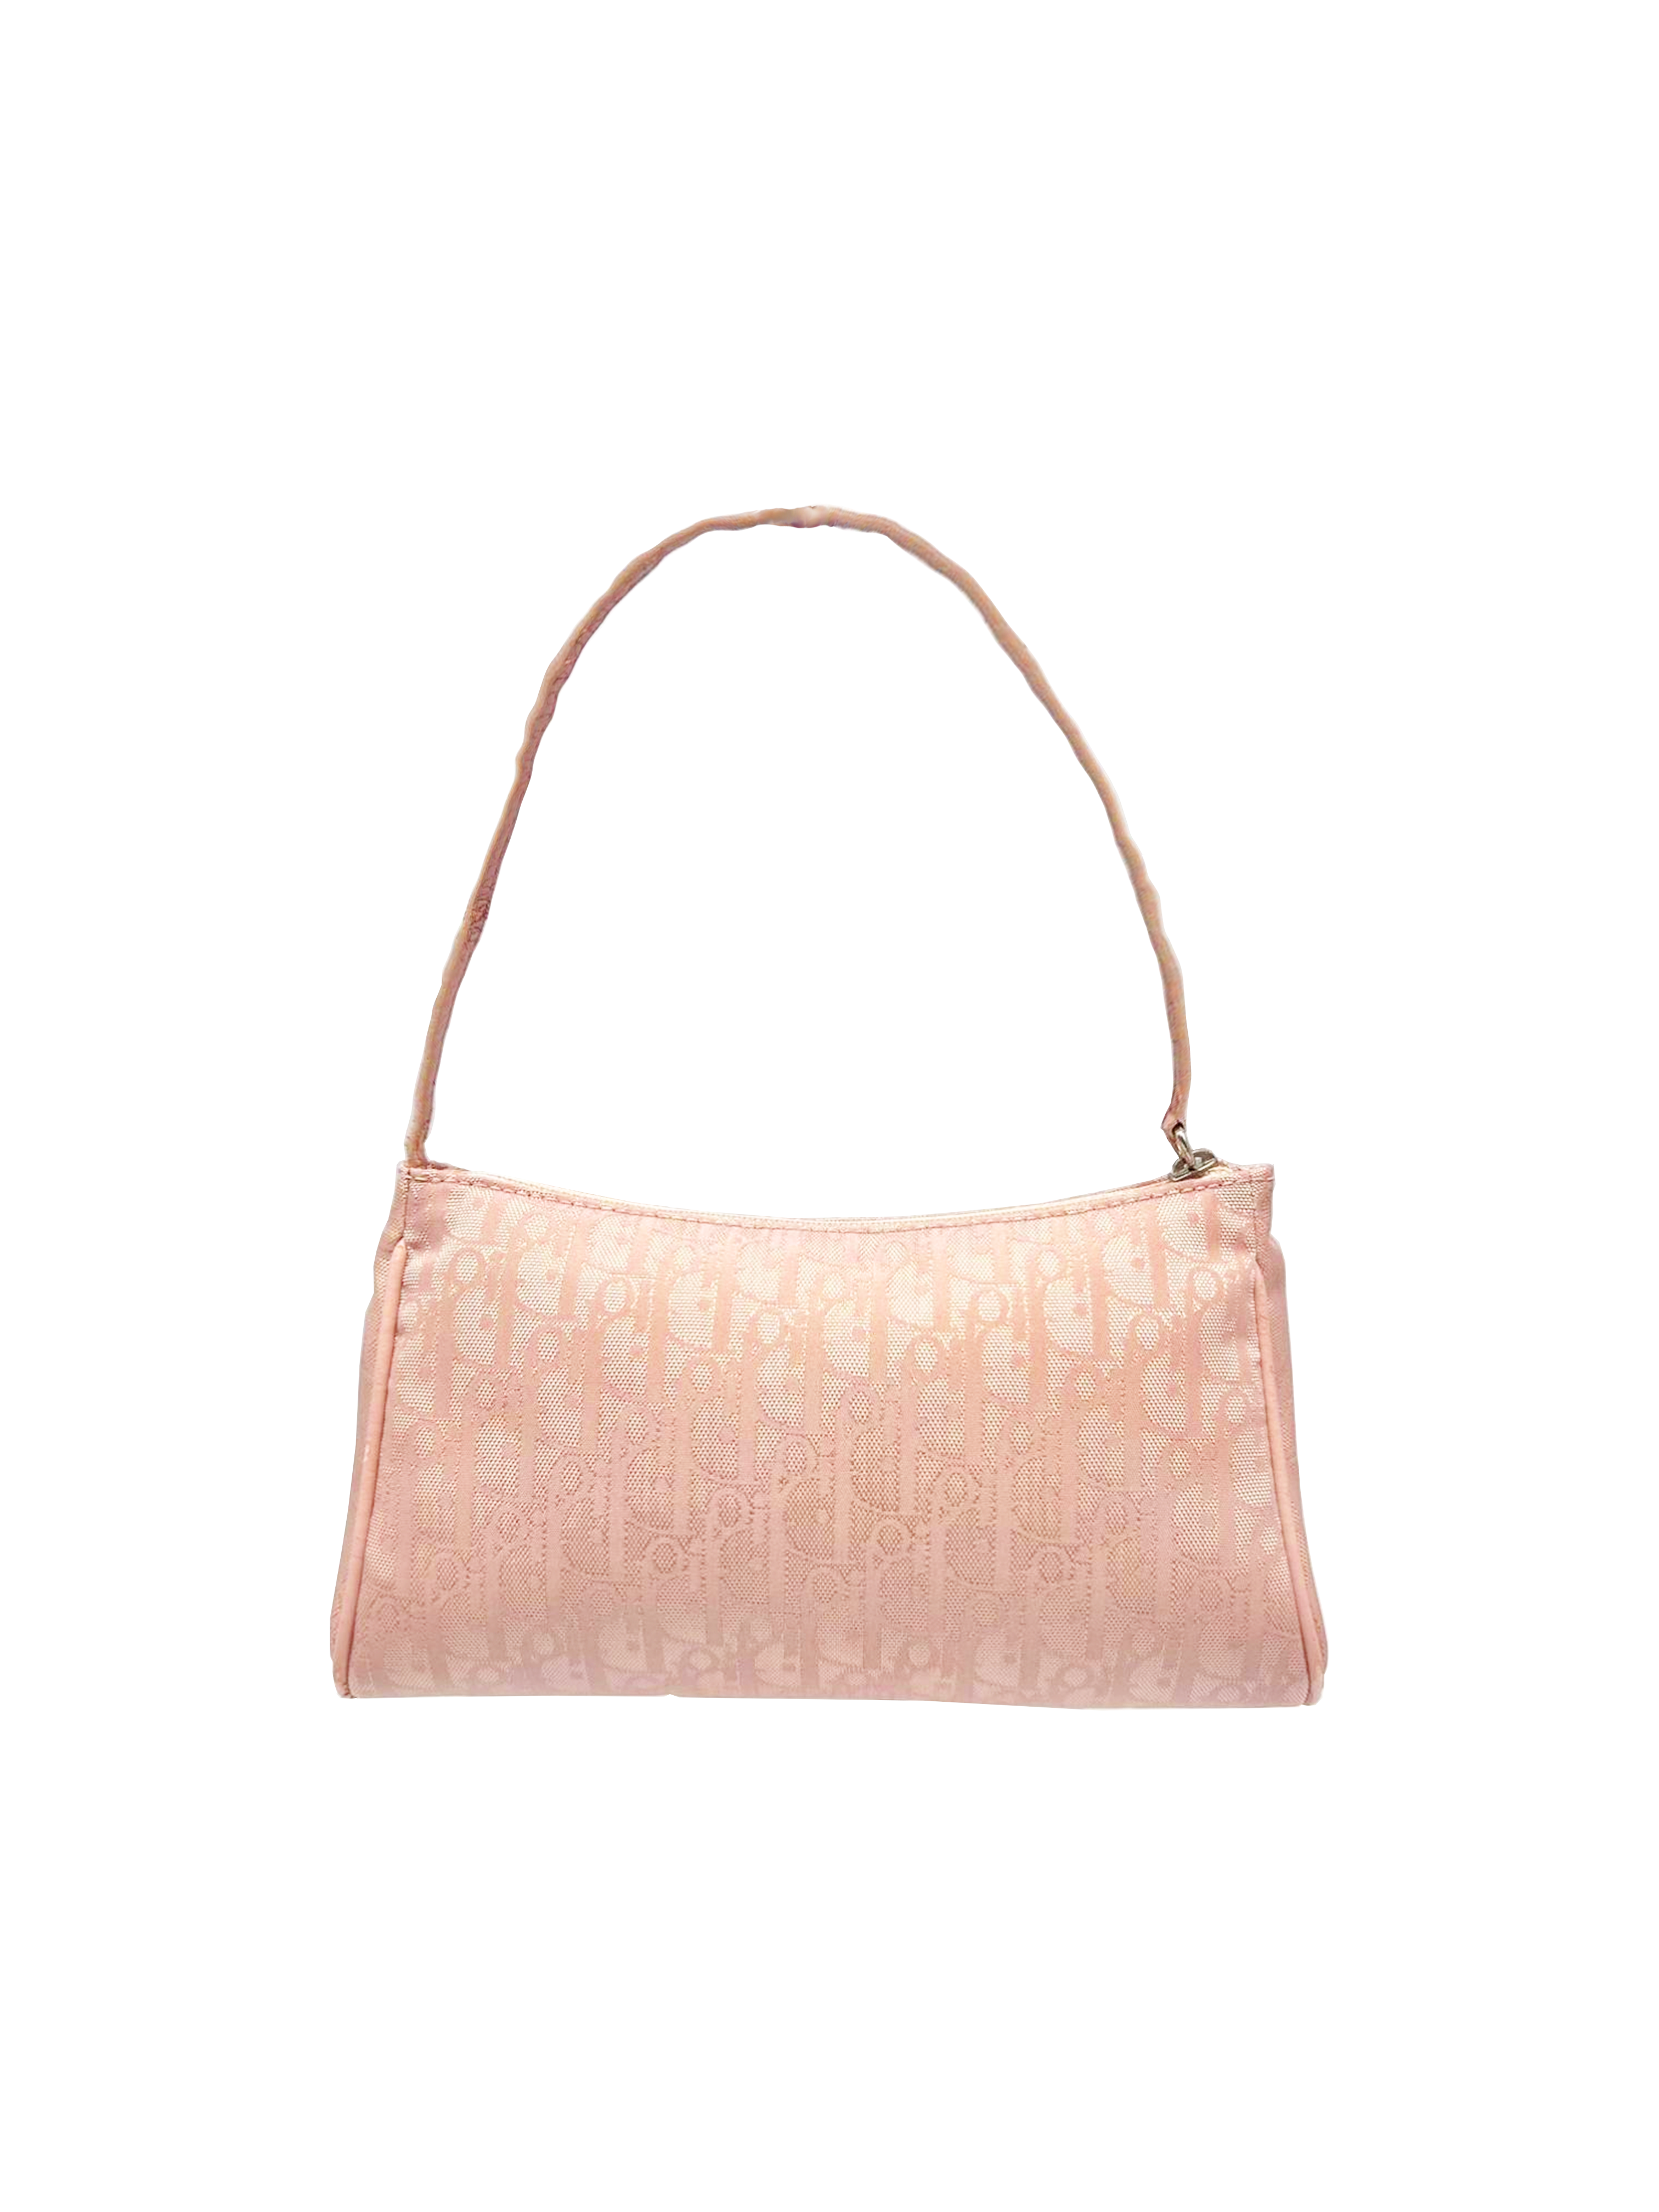 Christian Dior Pink Monogram Logo Small Pouch Bag